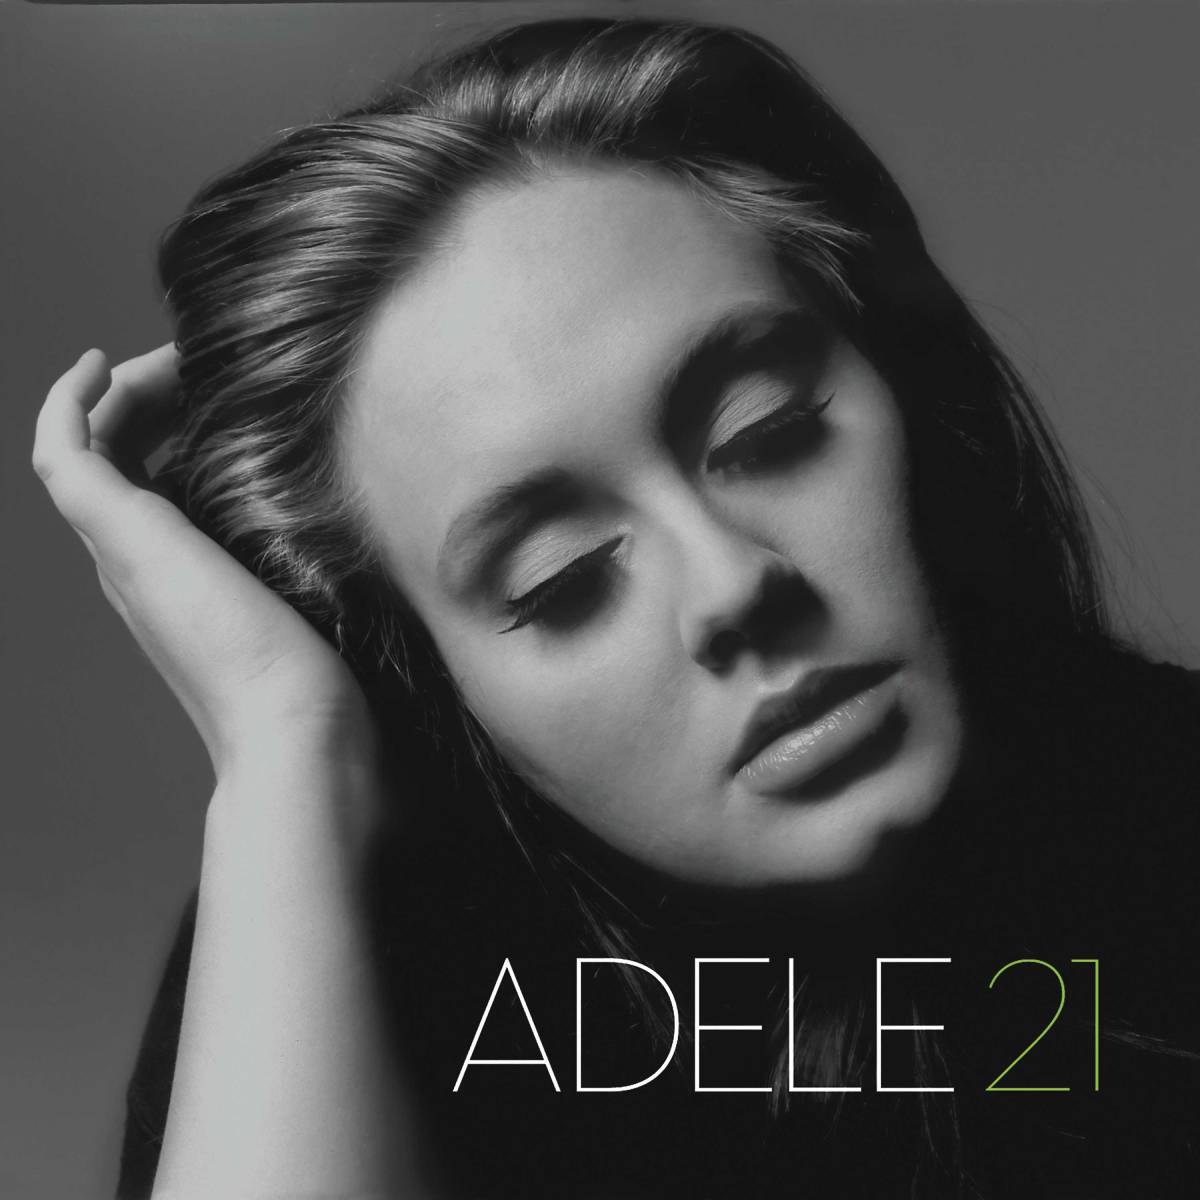 "21" - Album der Sängerin Adele (Cover)